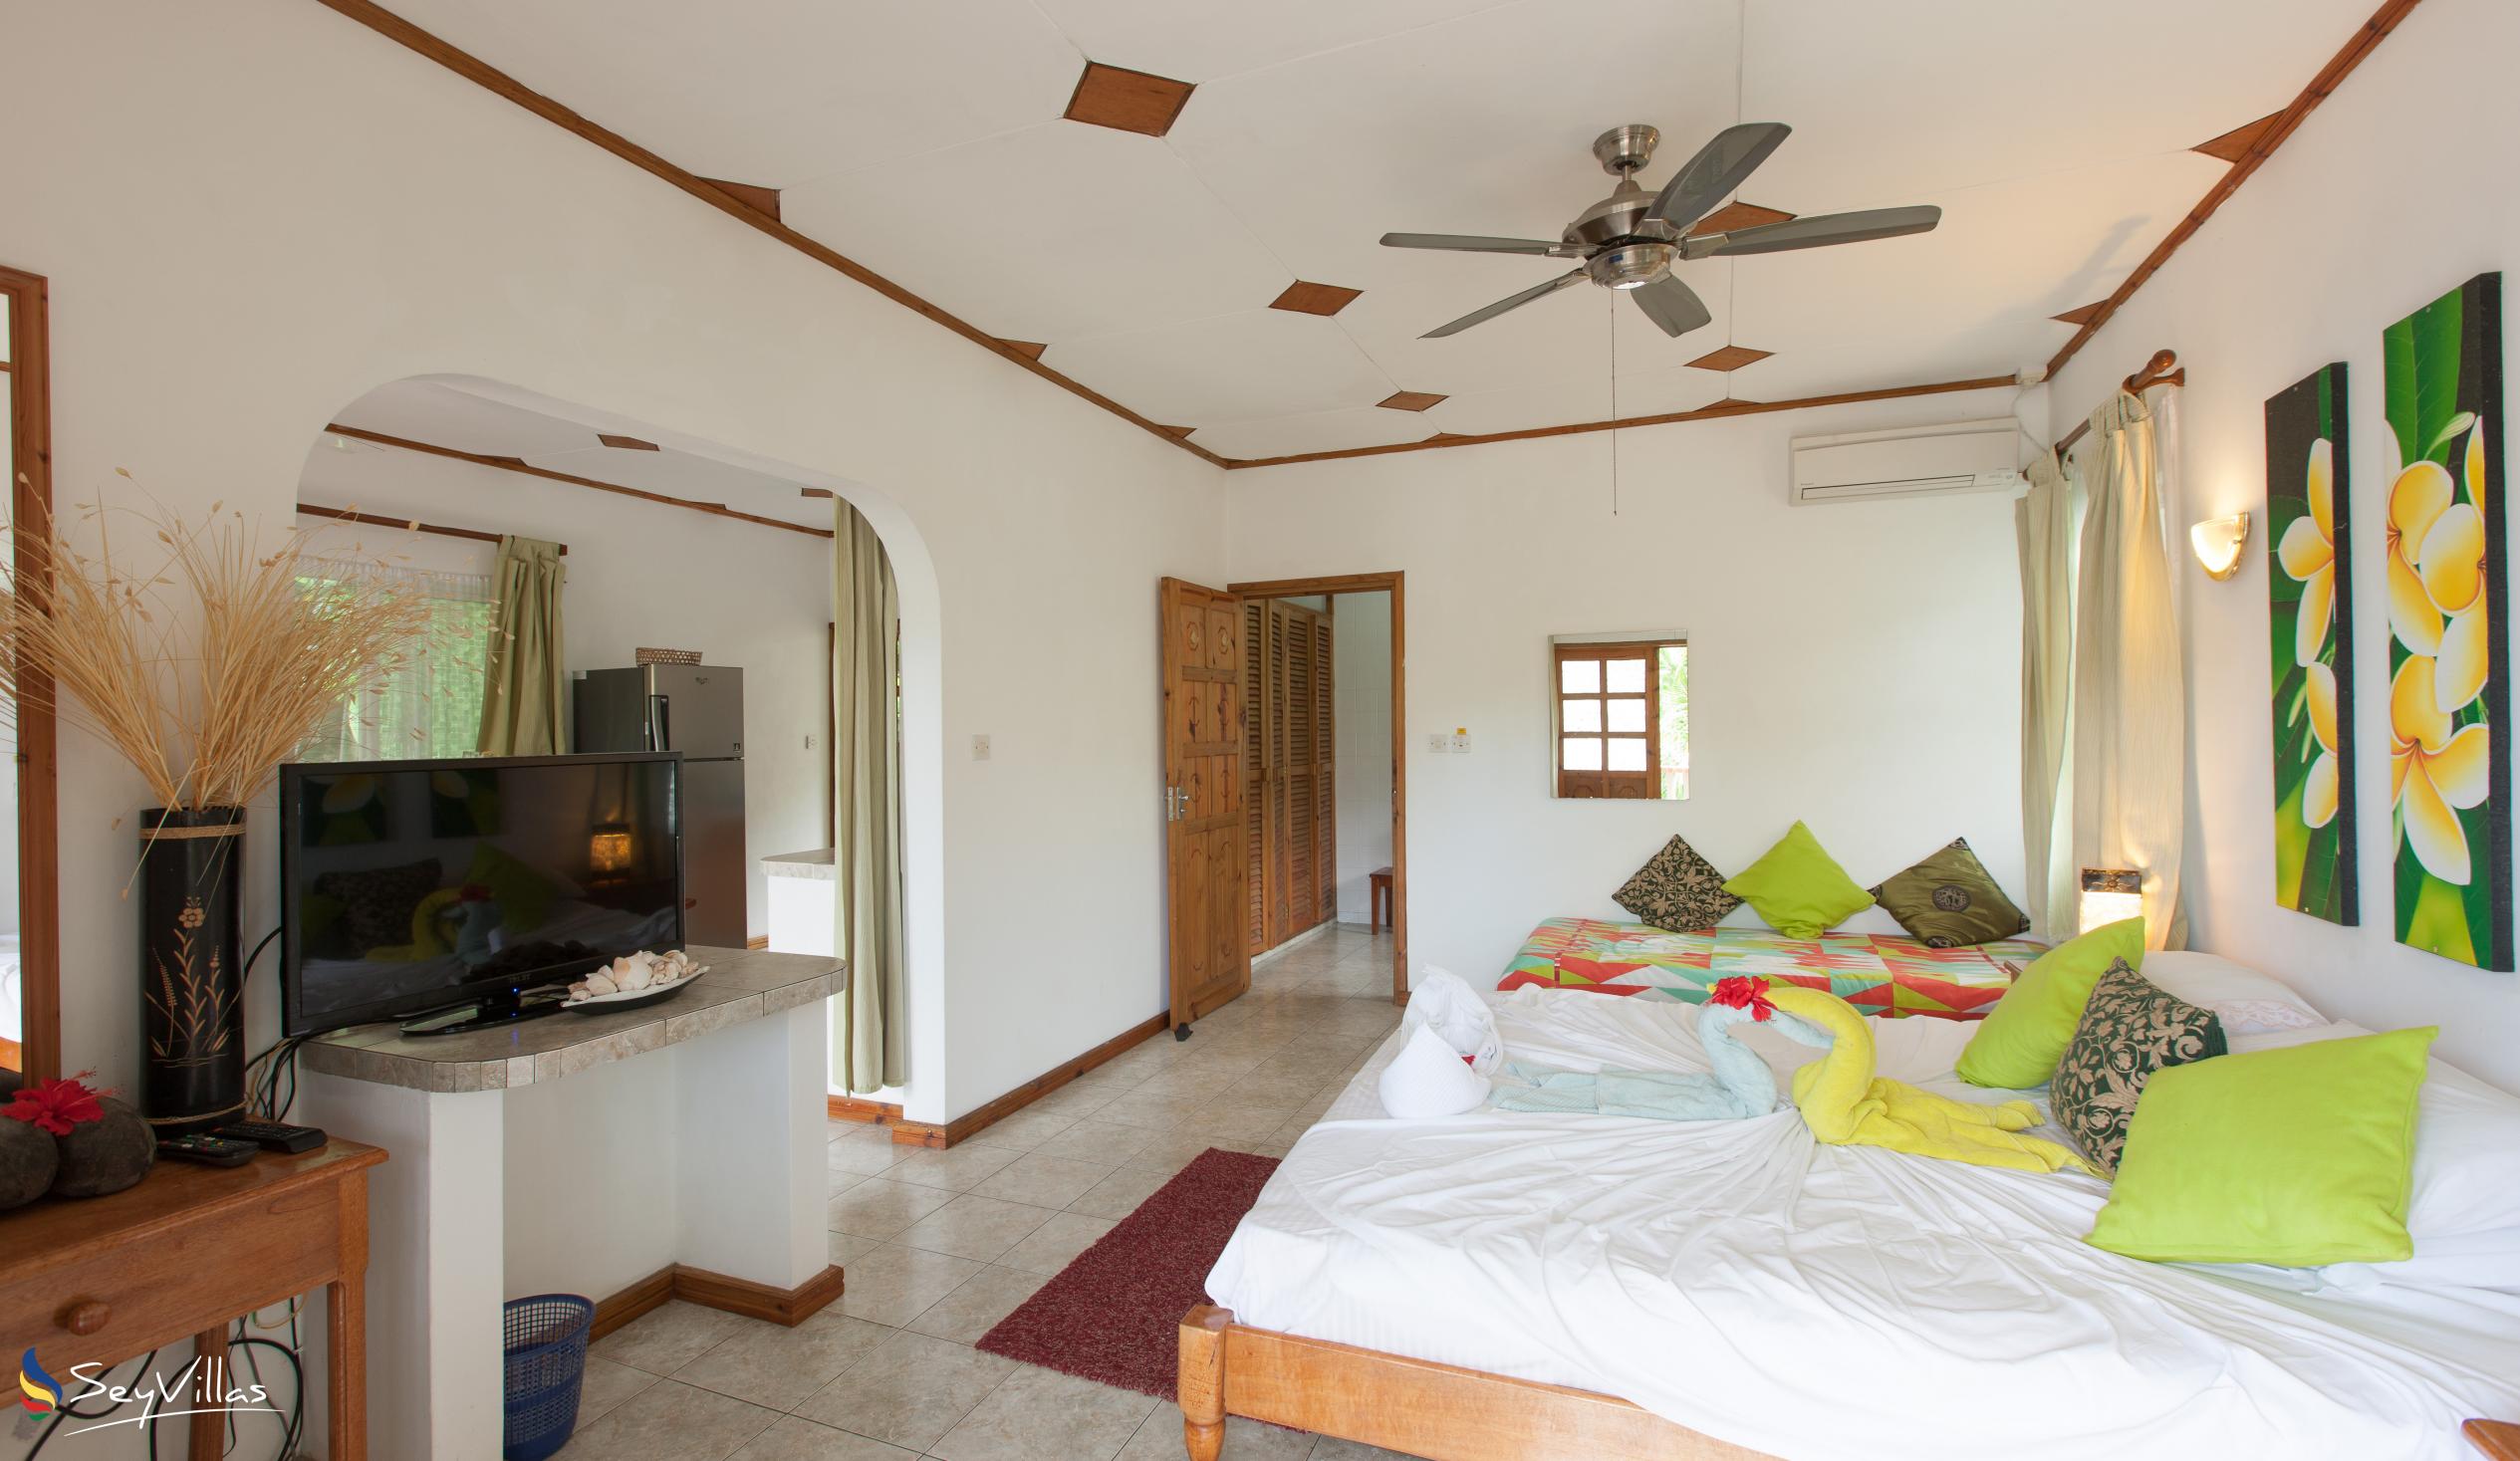 Photo 113: Sea View Lodge - Small Stilt-Villa - Praslin (Seychelles)